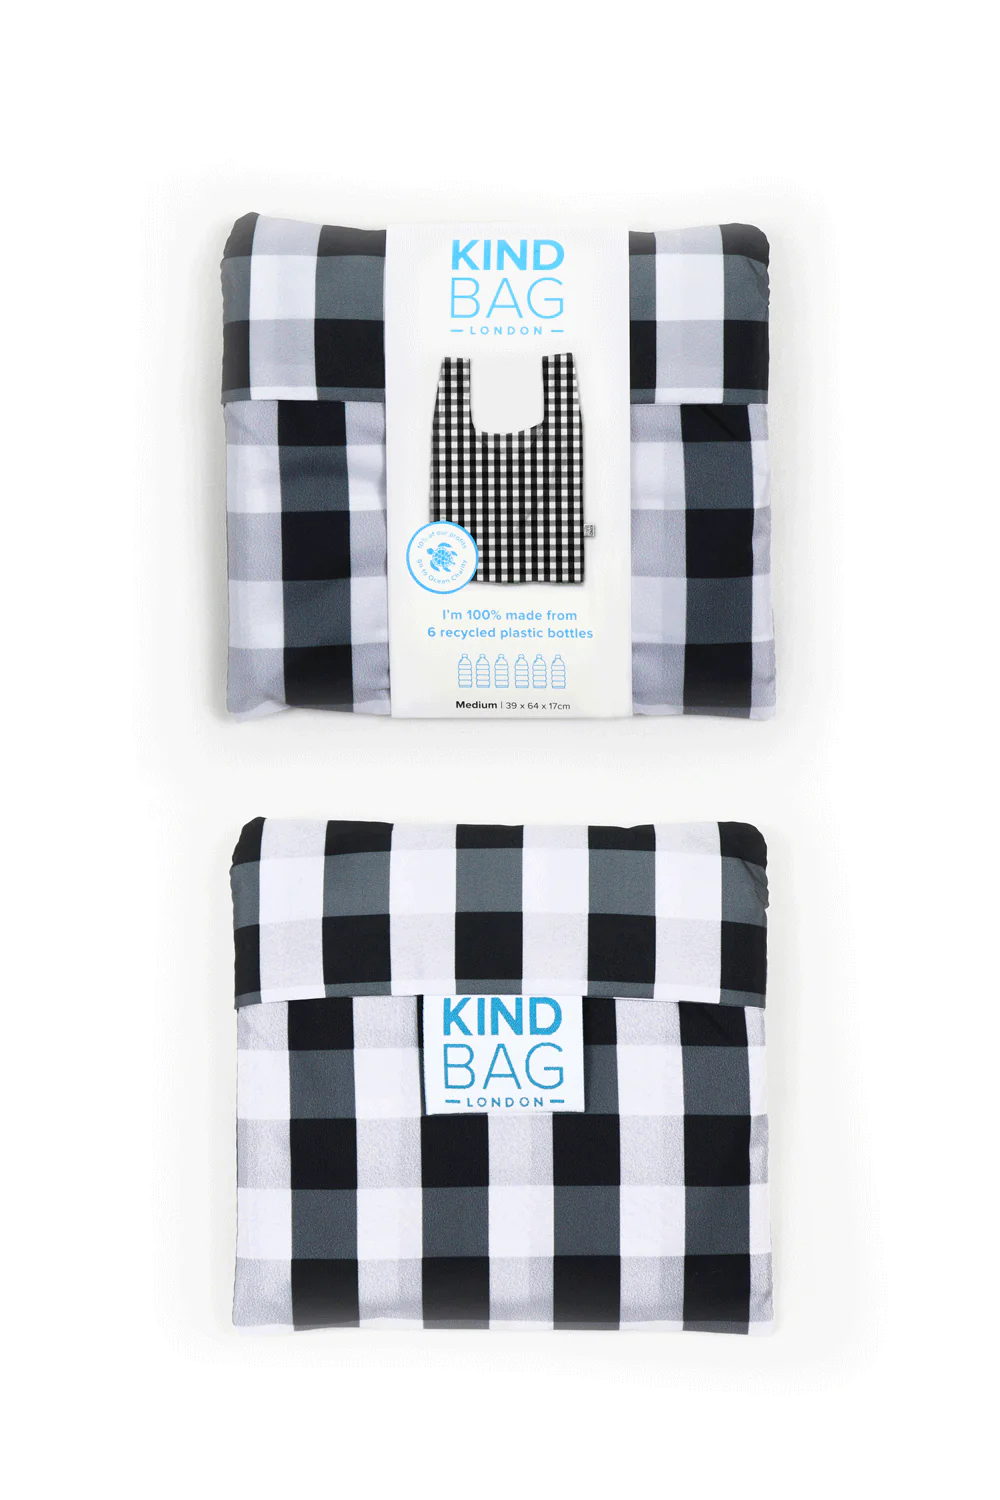 Kind Bag Reusable Medium Shopping Bag - Gingham Black and White Check